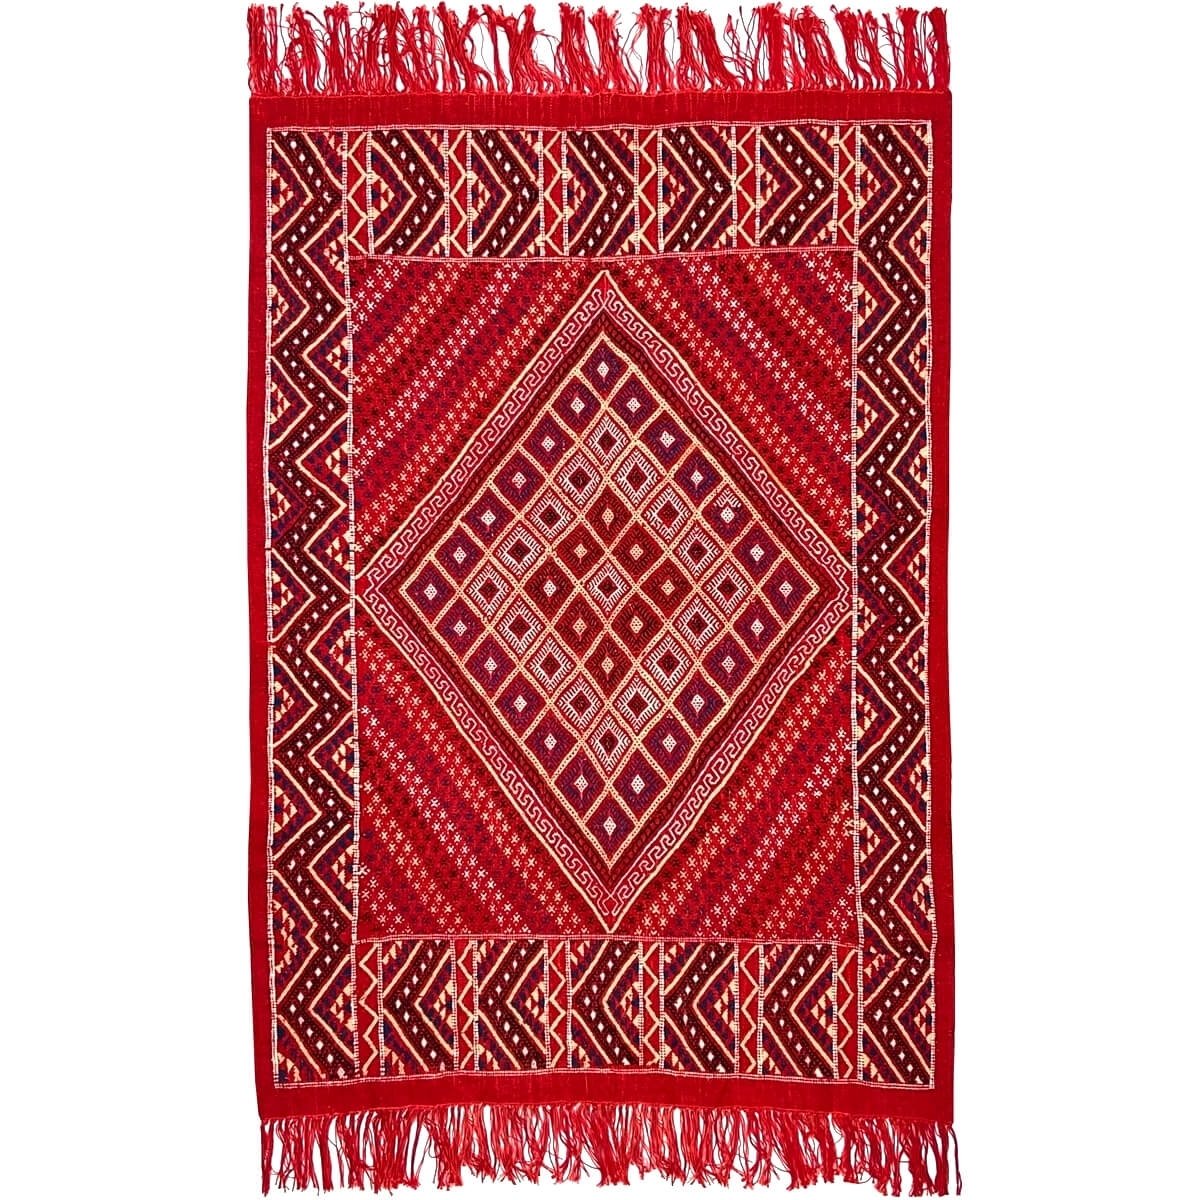 Berber carpet Rug Margoum Azid 128x200 Red (Handmade, Wool) Tunisian margoum rug from the city of Kairouan. Rectangular living r